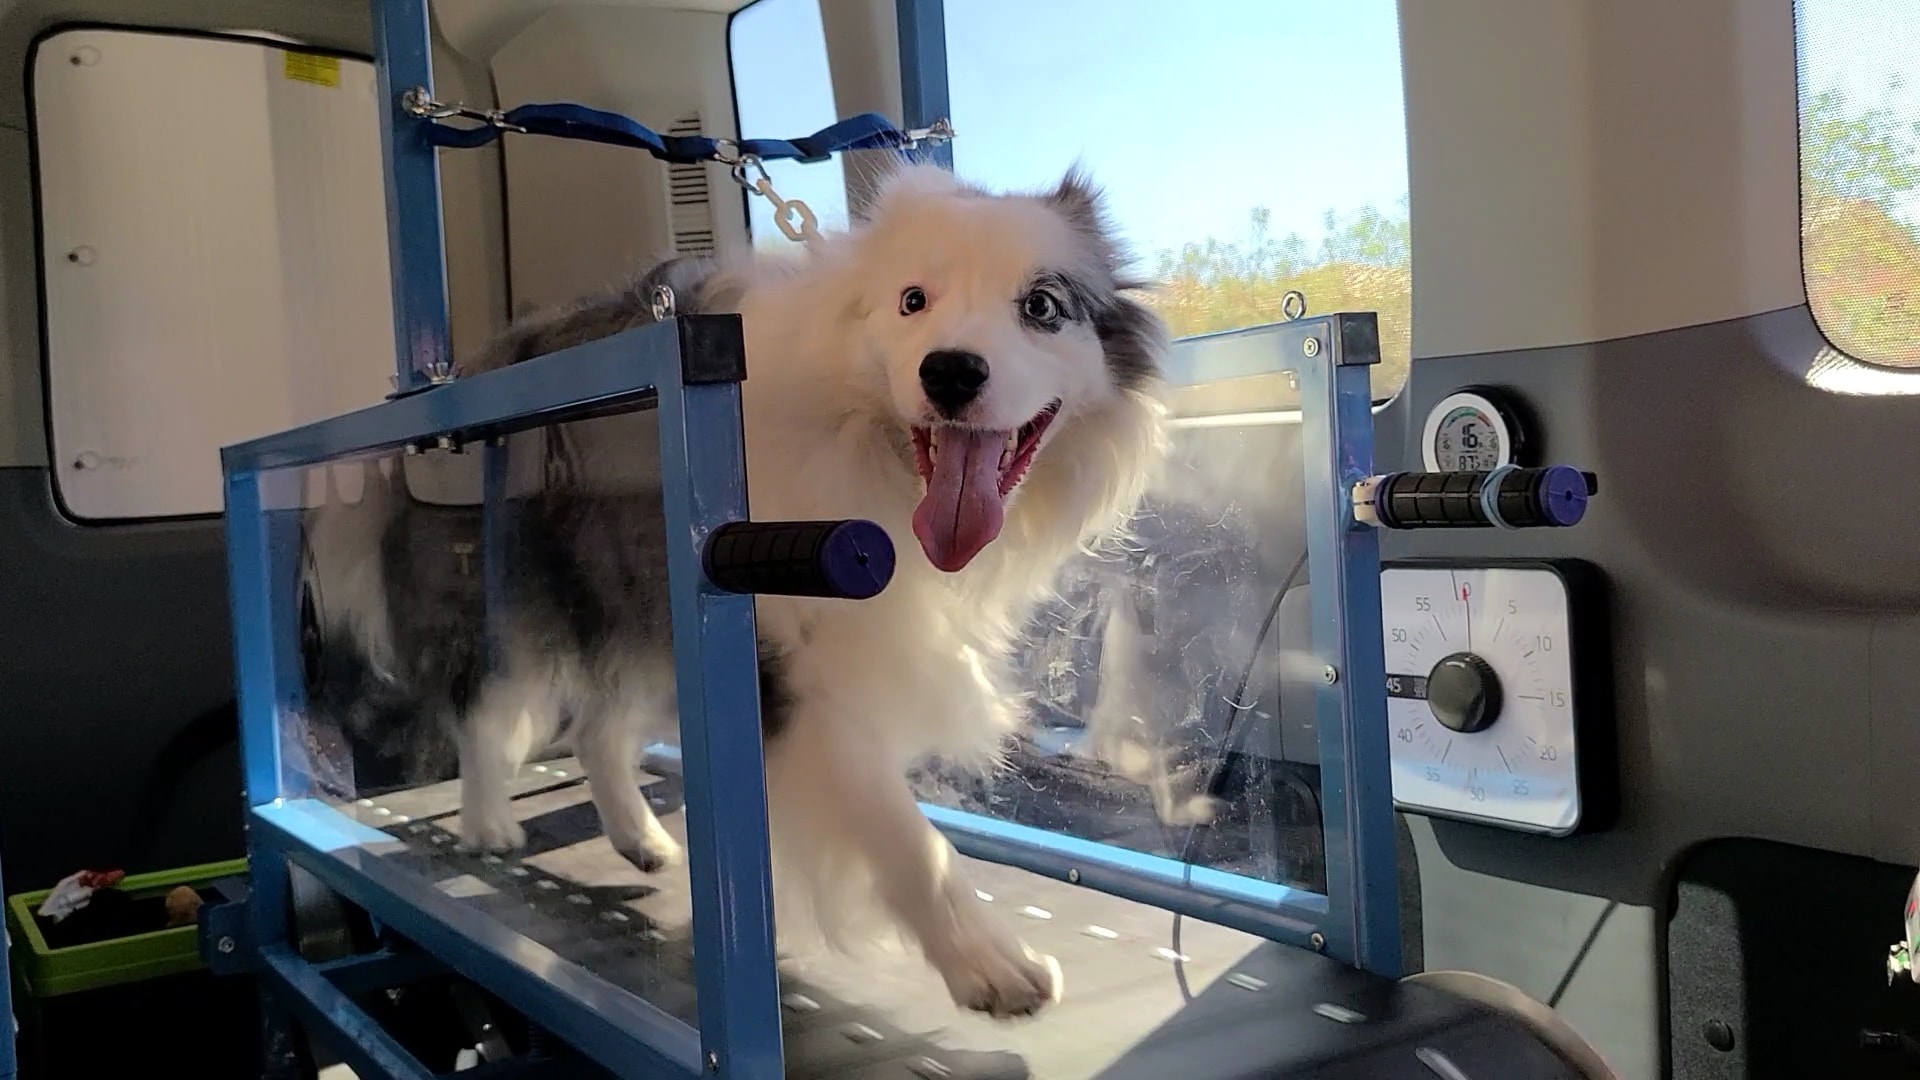 high quality dog treadmill pet dog